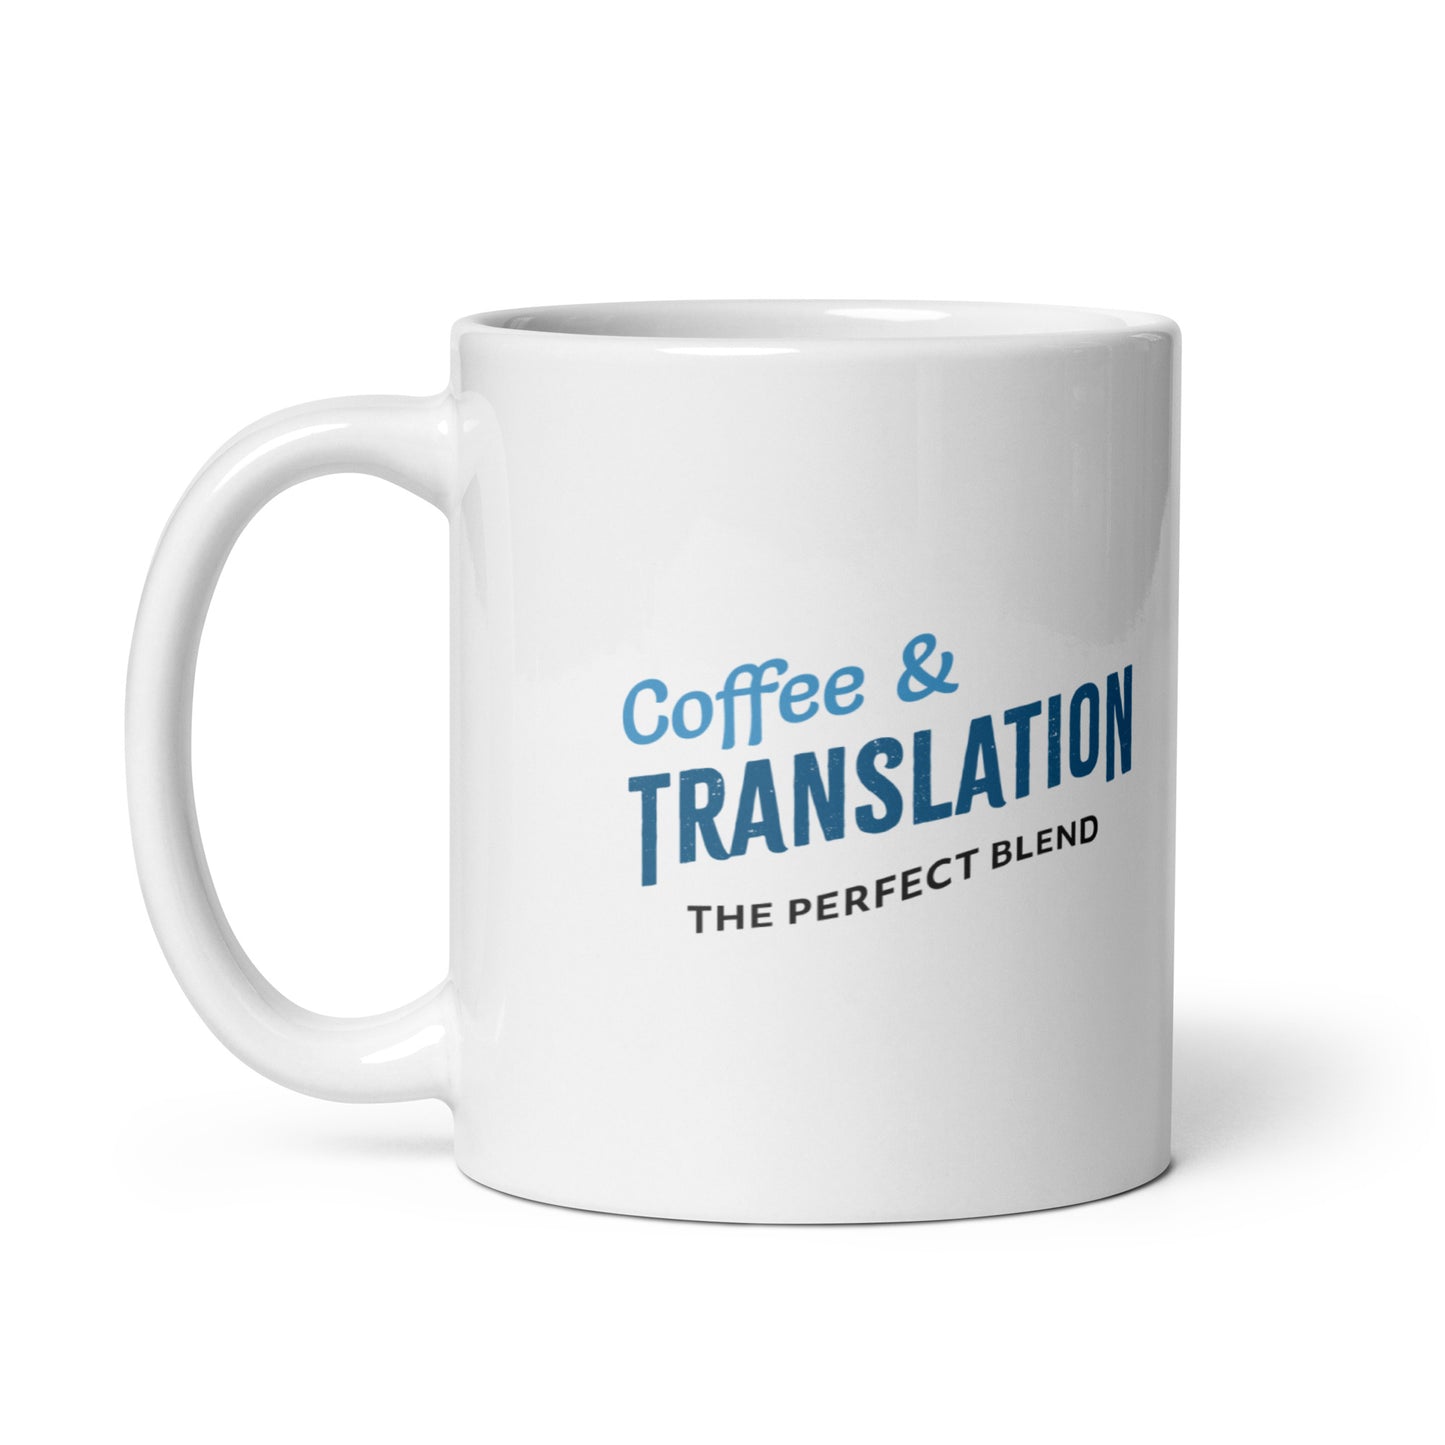 Coffee & Translation The Perfect Blend Coffee Mug with ATA Logo